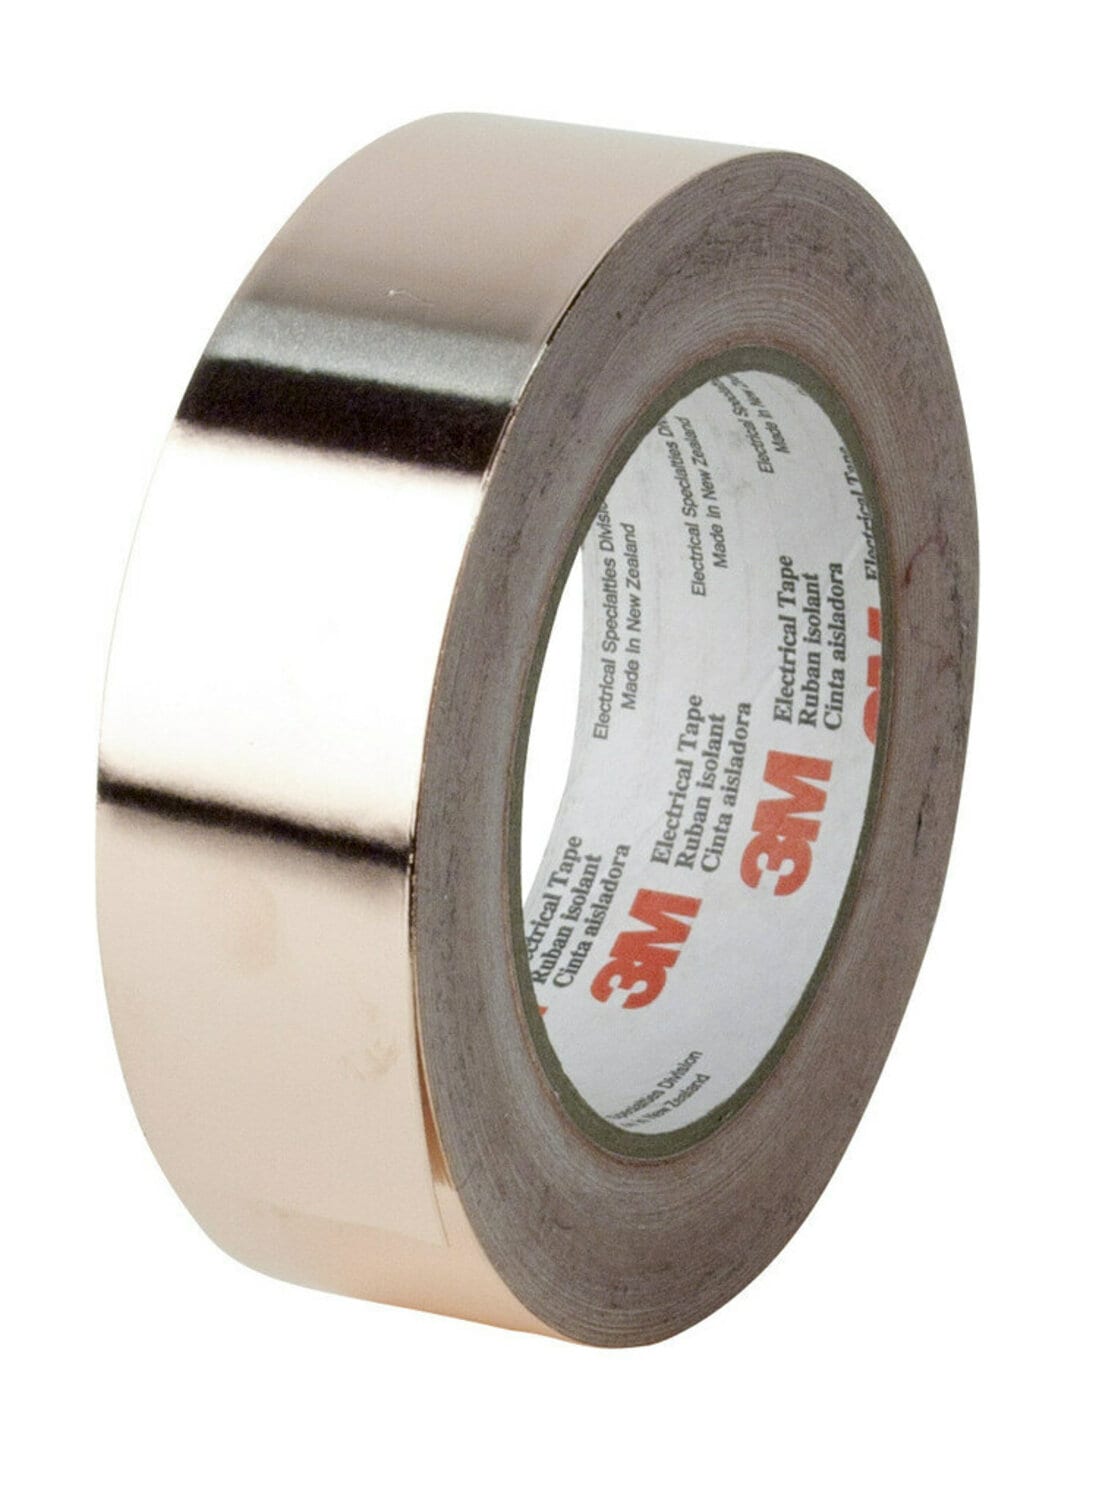 7010348241 - 3M Copper EMI Shielding Tape 1194, 2 1/2 in x 36 yd, 3 in paper core, 5
Rolls/Case